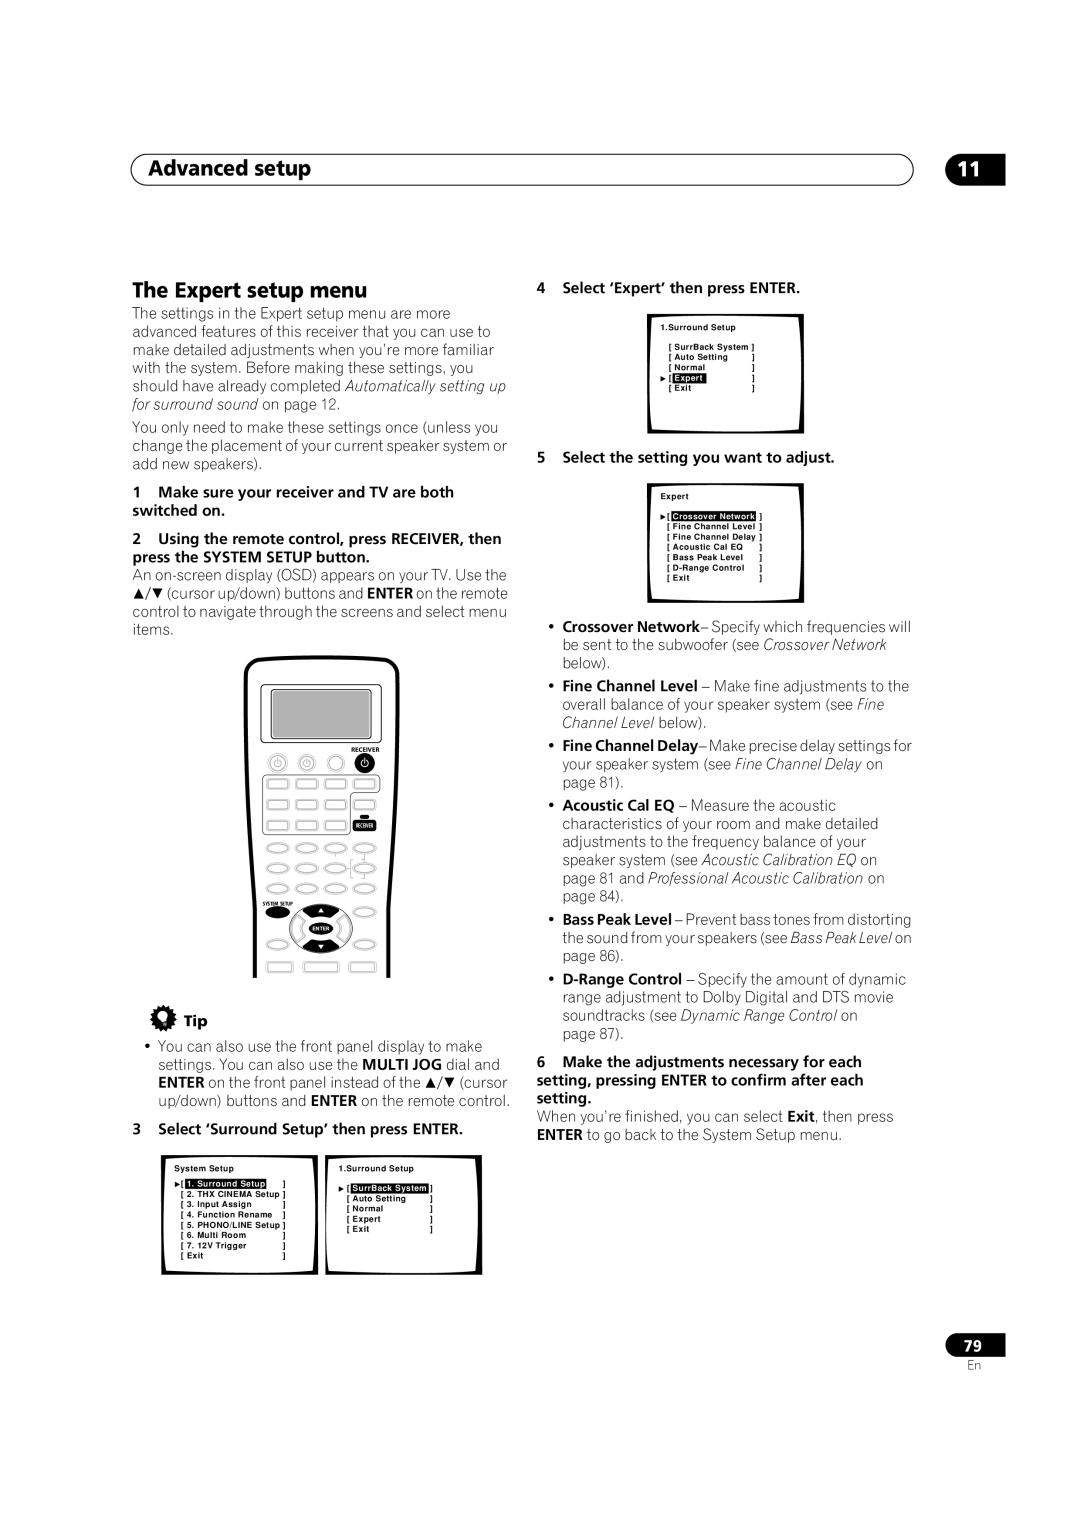 Pioneer VSX-9300TX manual Advanced setup The Expert setup menu, Select ‘Surround Setup’ then press ENTER 